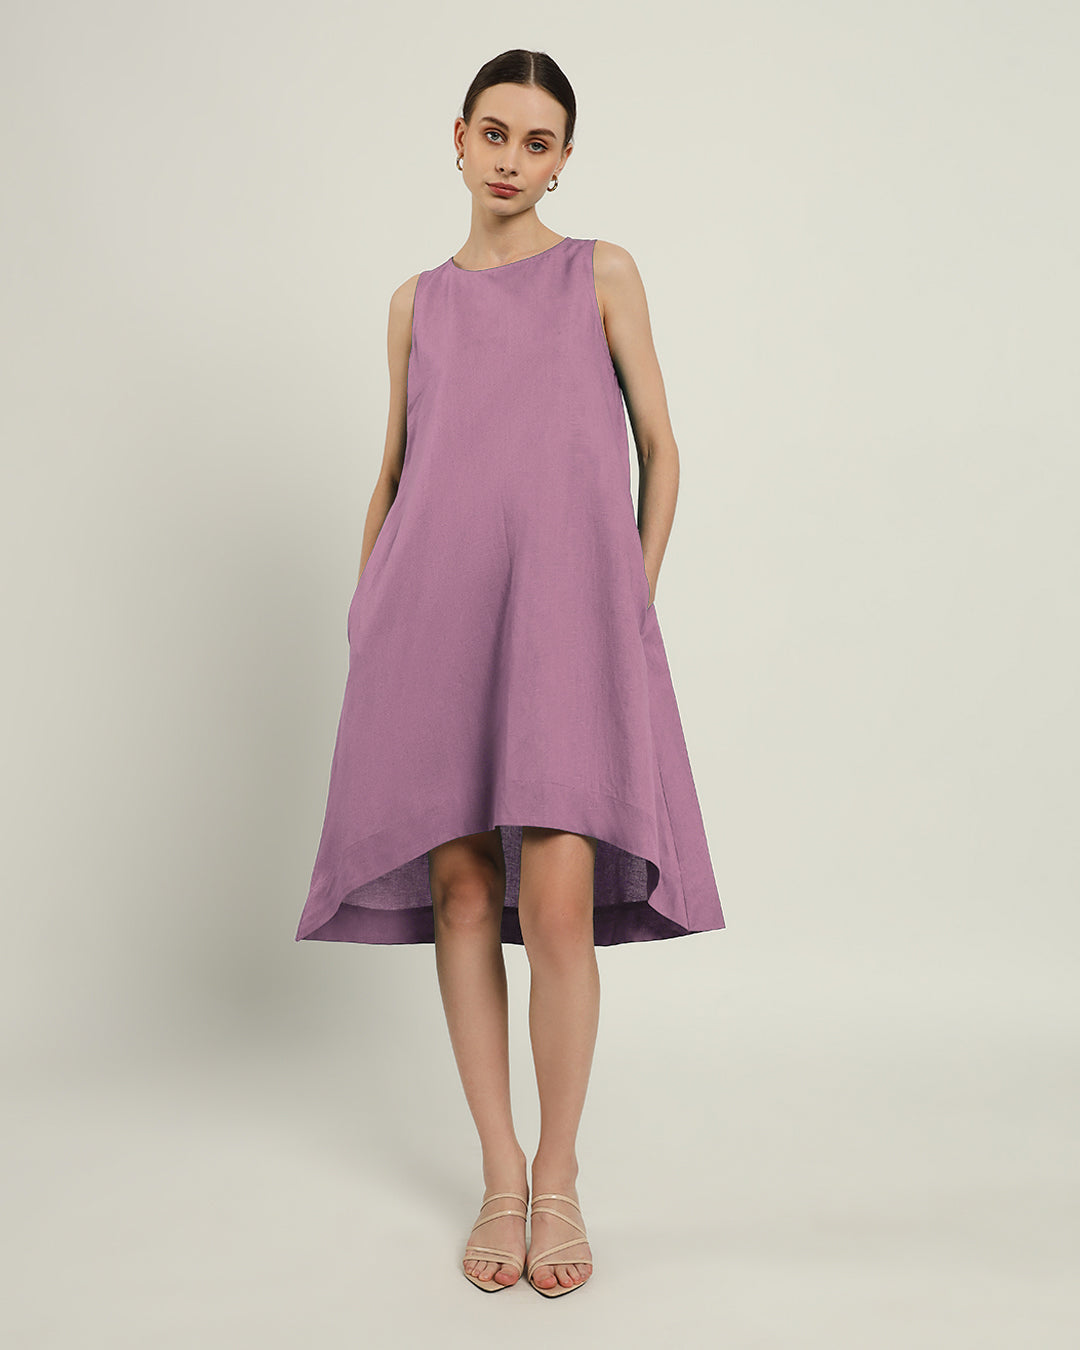 The Odesa Purple Swirl Dress